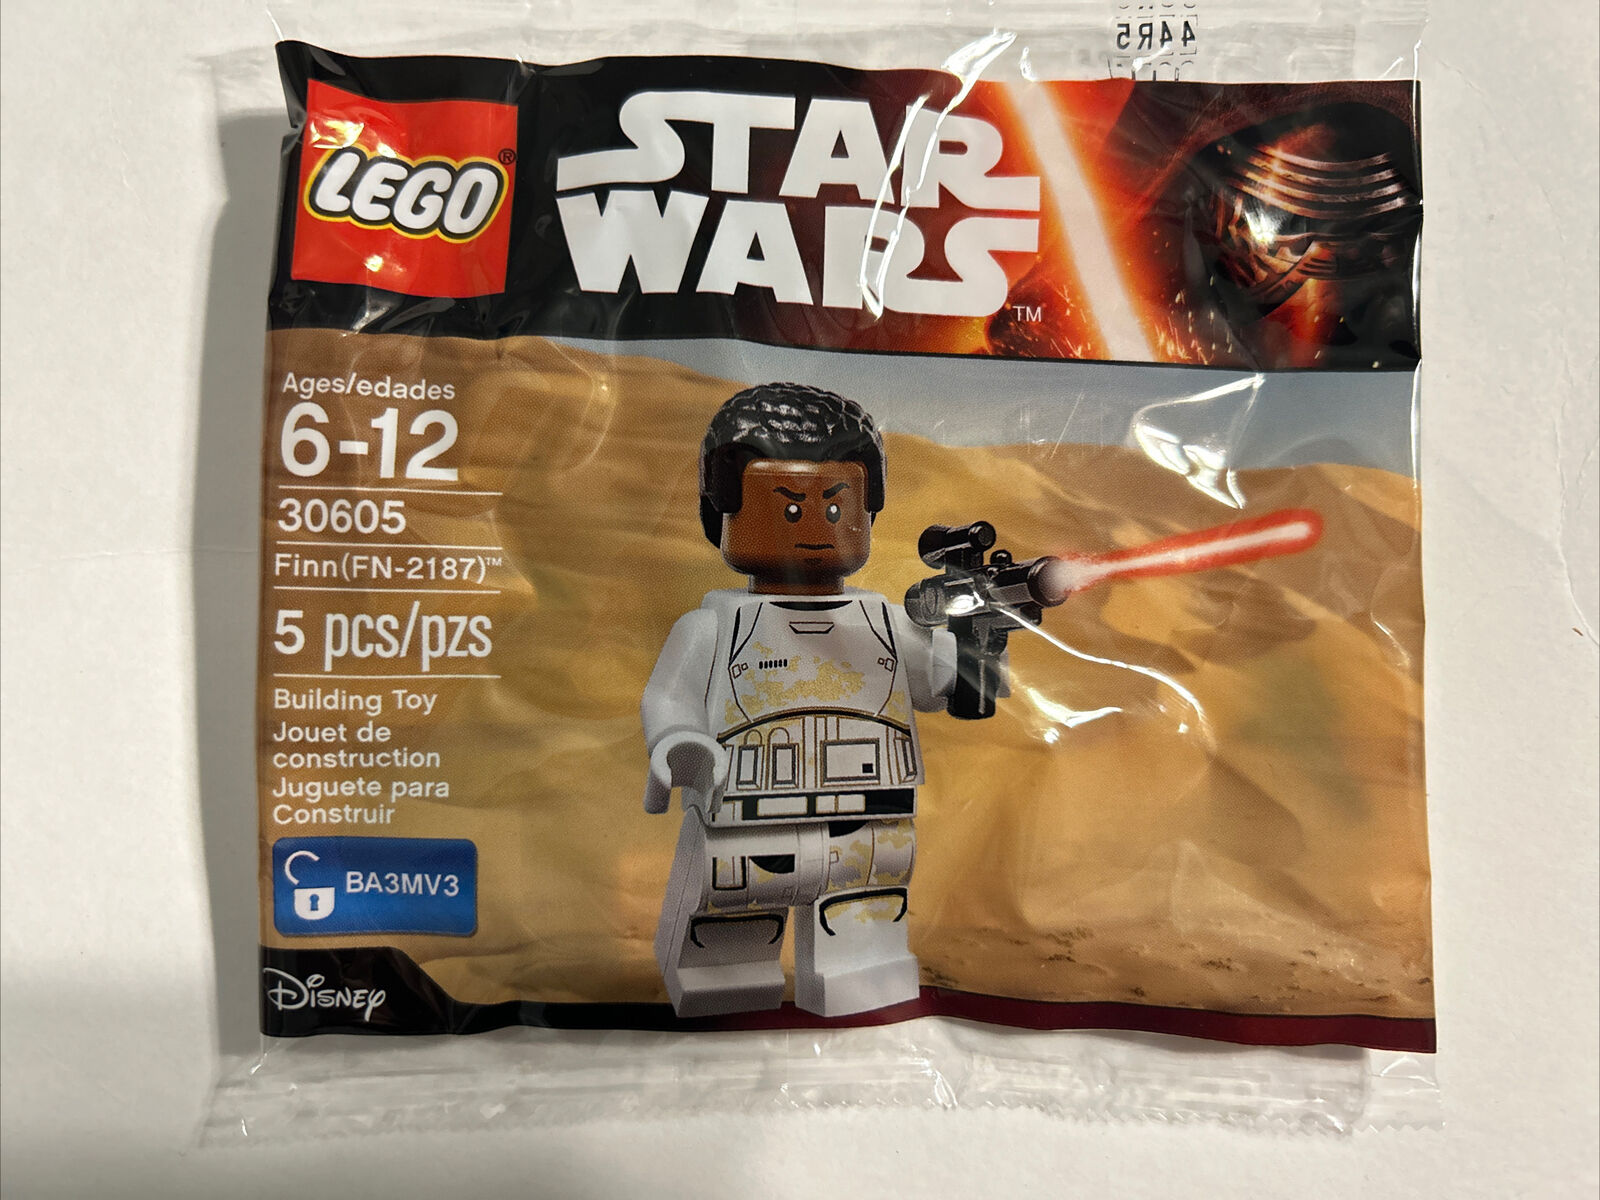 Lego Star Wars Finn (FN-2187) Polybag Minifigure 30605 NEW UNOPENED